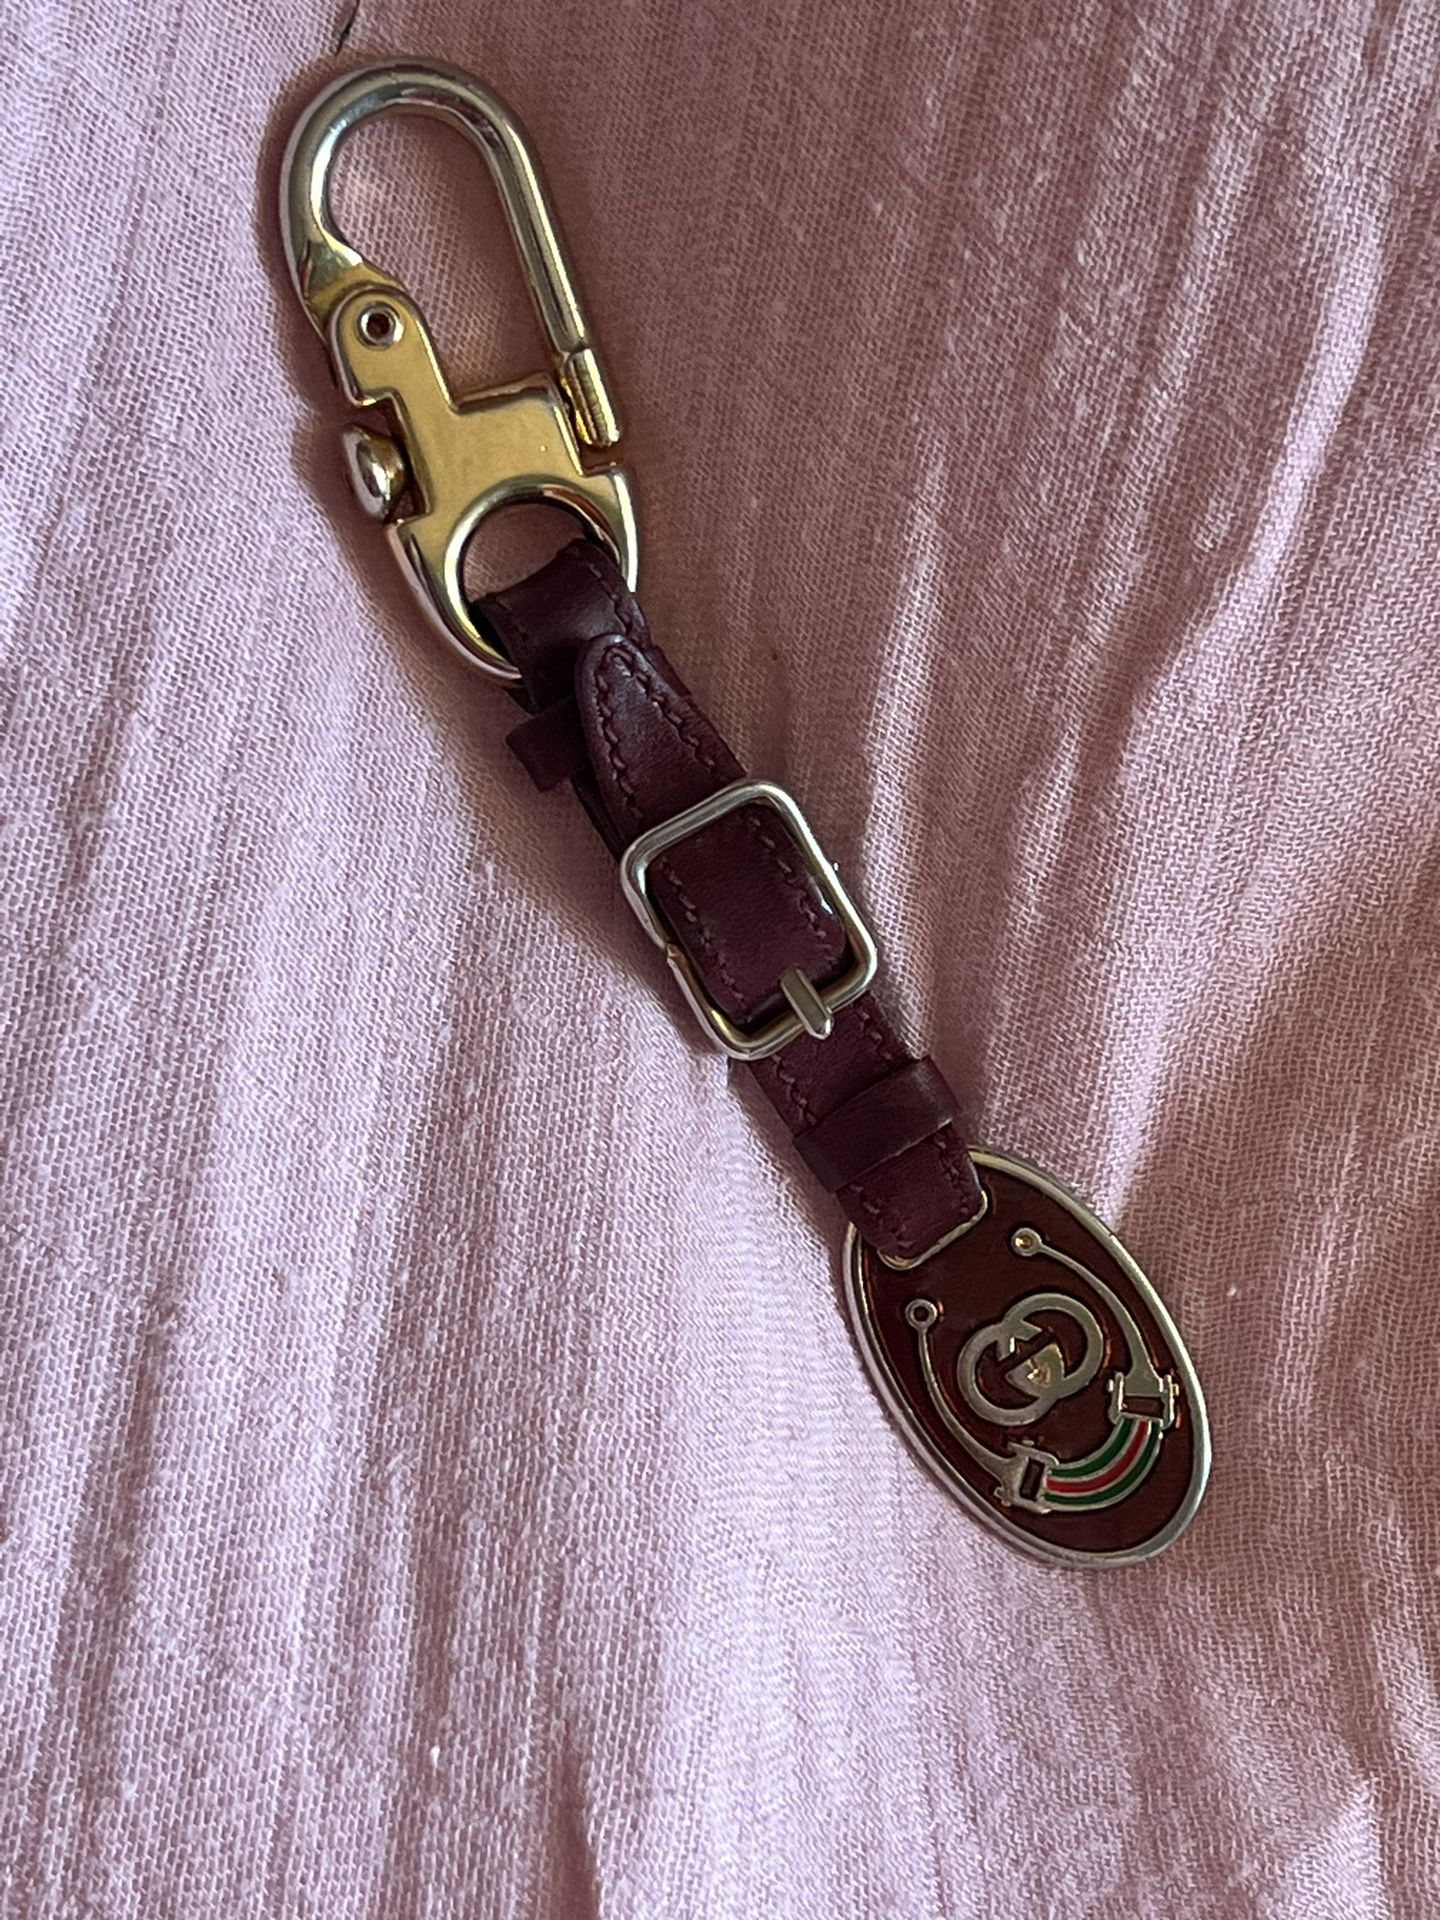 Vintage Leather Gucci keychain Key Chain Key Fob Charm Brown Leather Gucci Logo